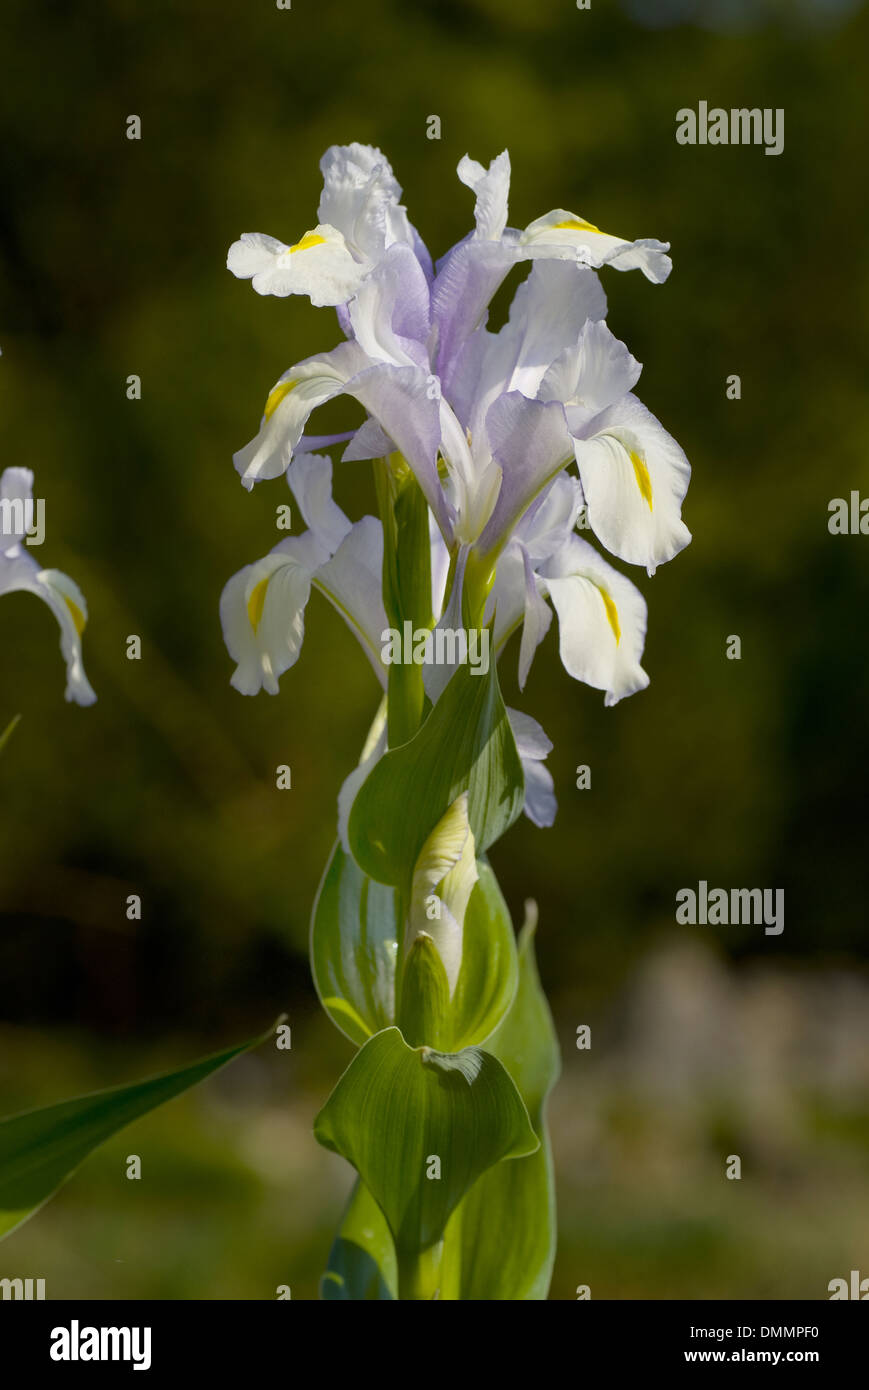 Magnifique iris, iris magnifica Banque D'Images